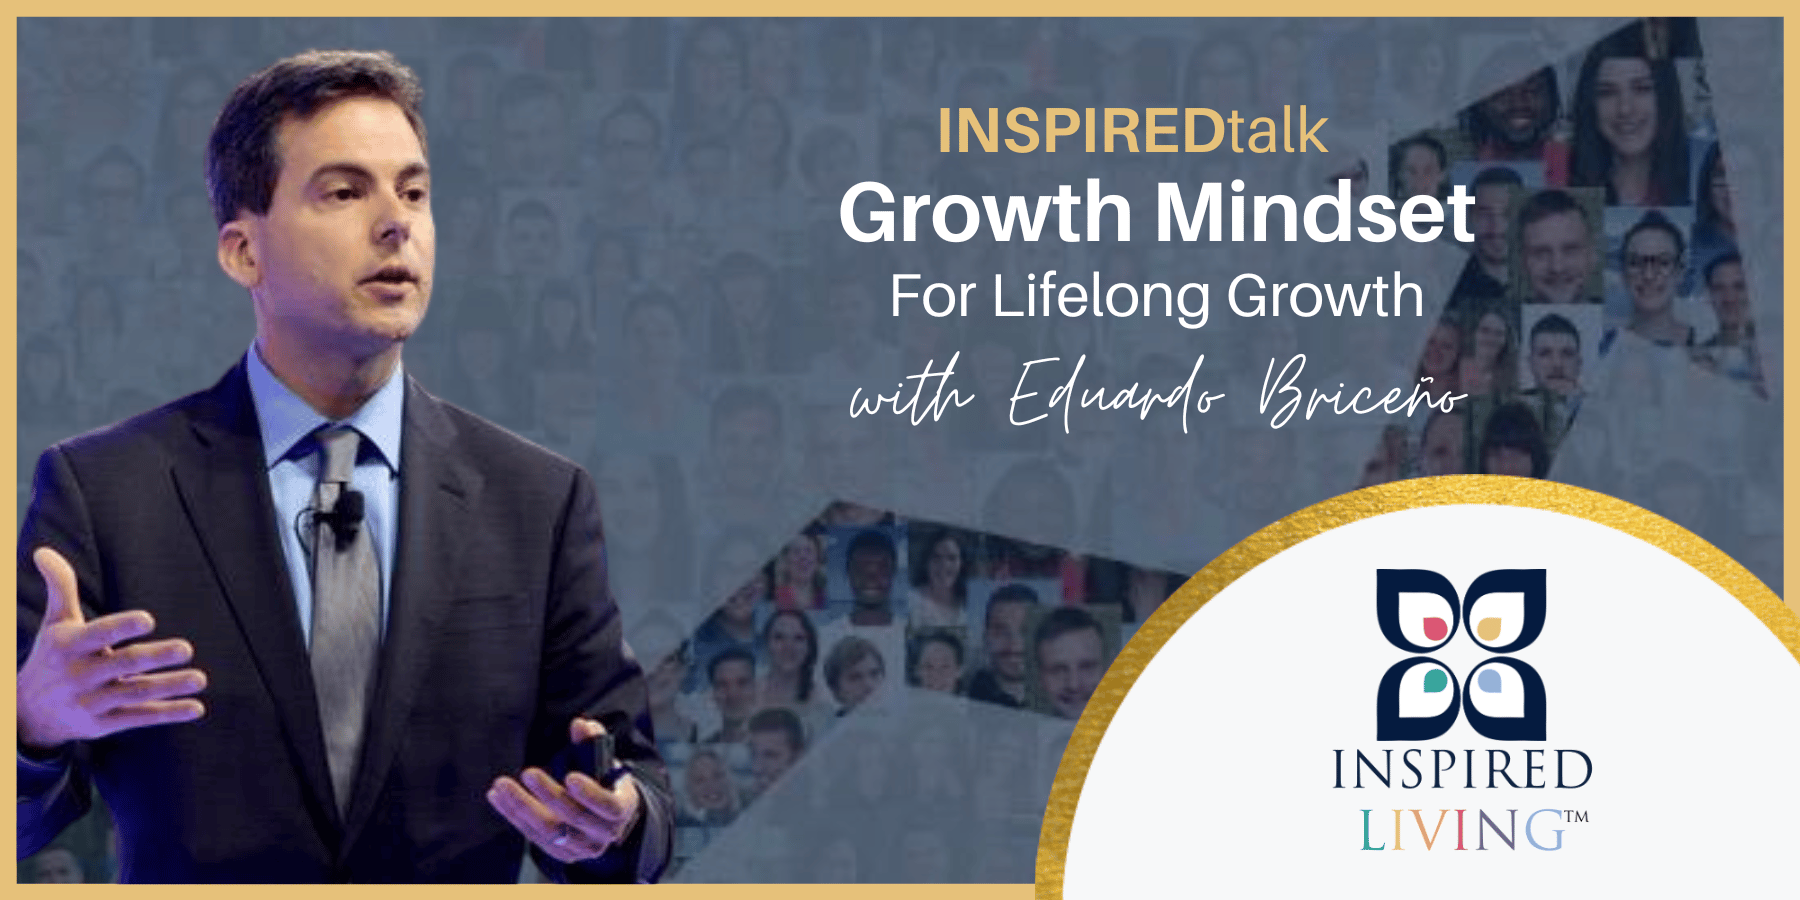 Watch the INSPIREDtalk: Growth Mindset with Eduardo Briceño